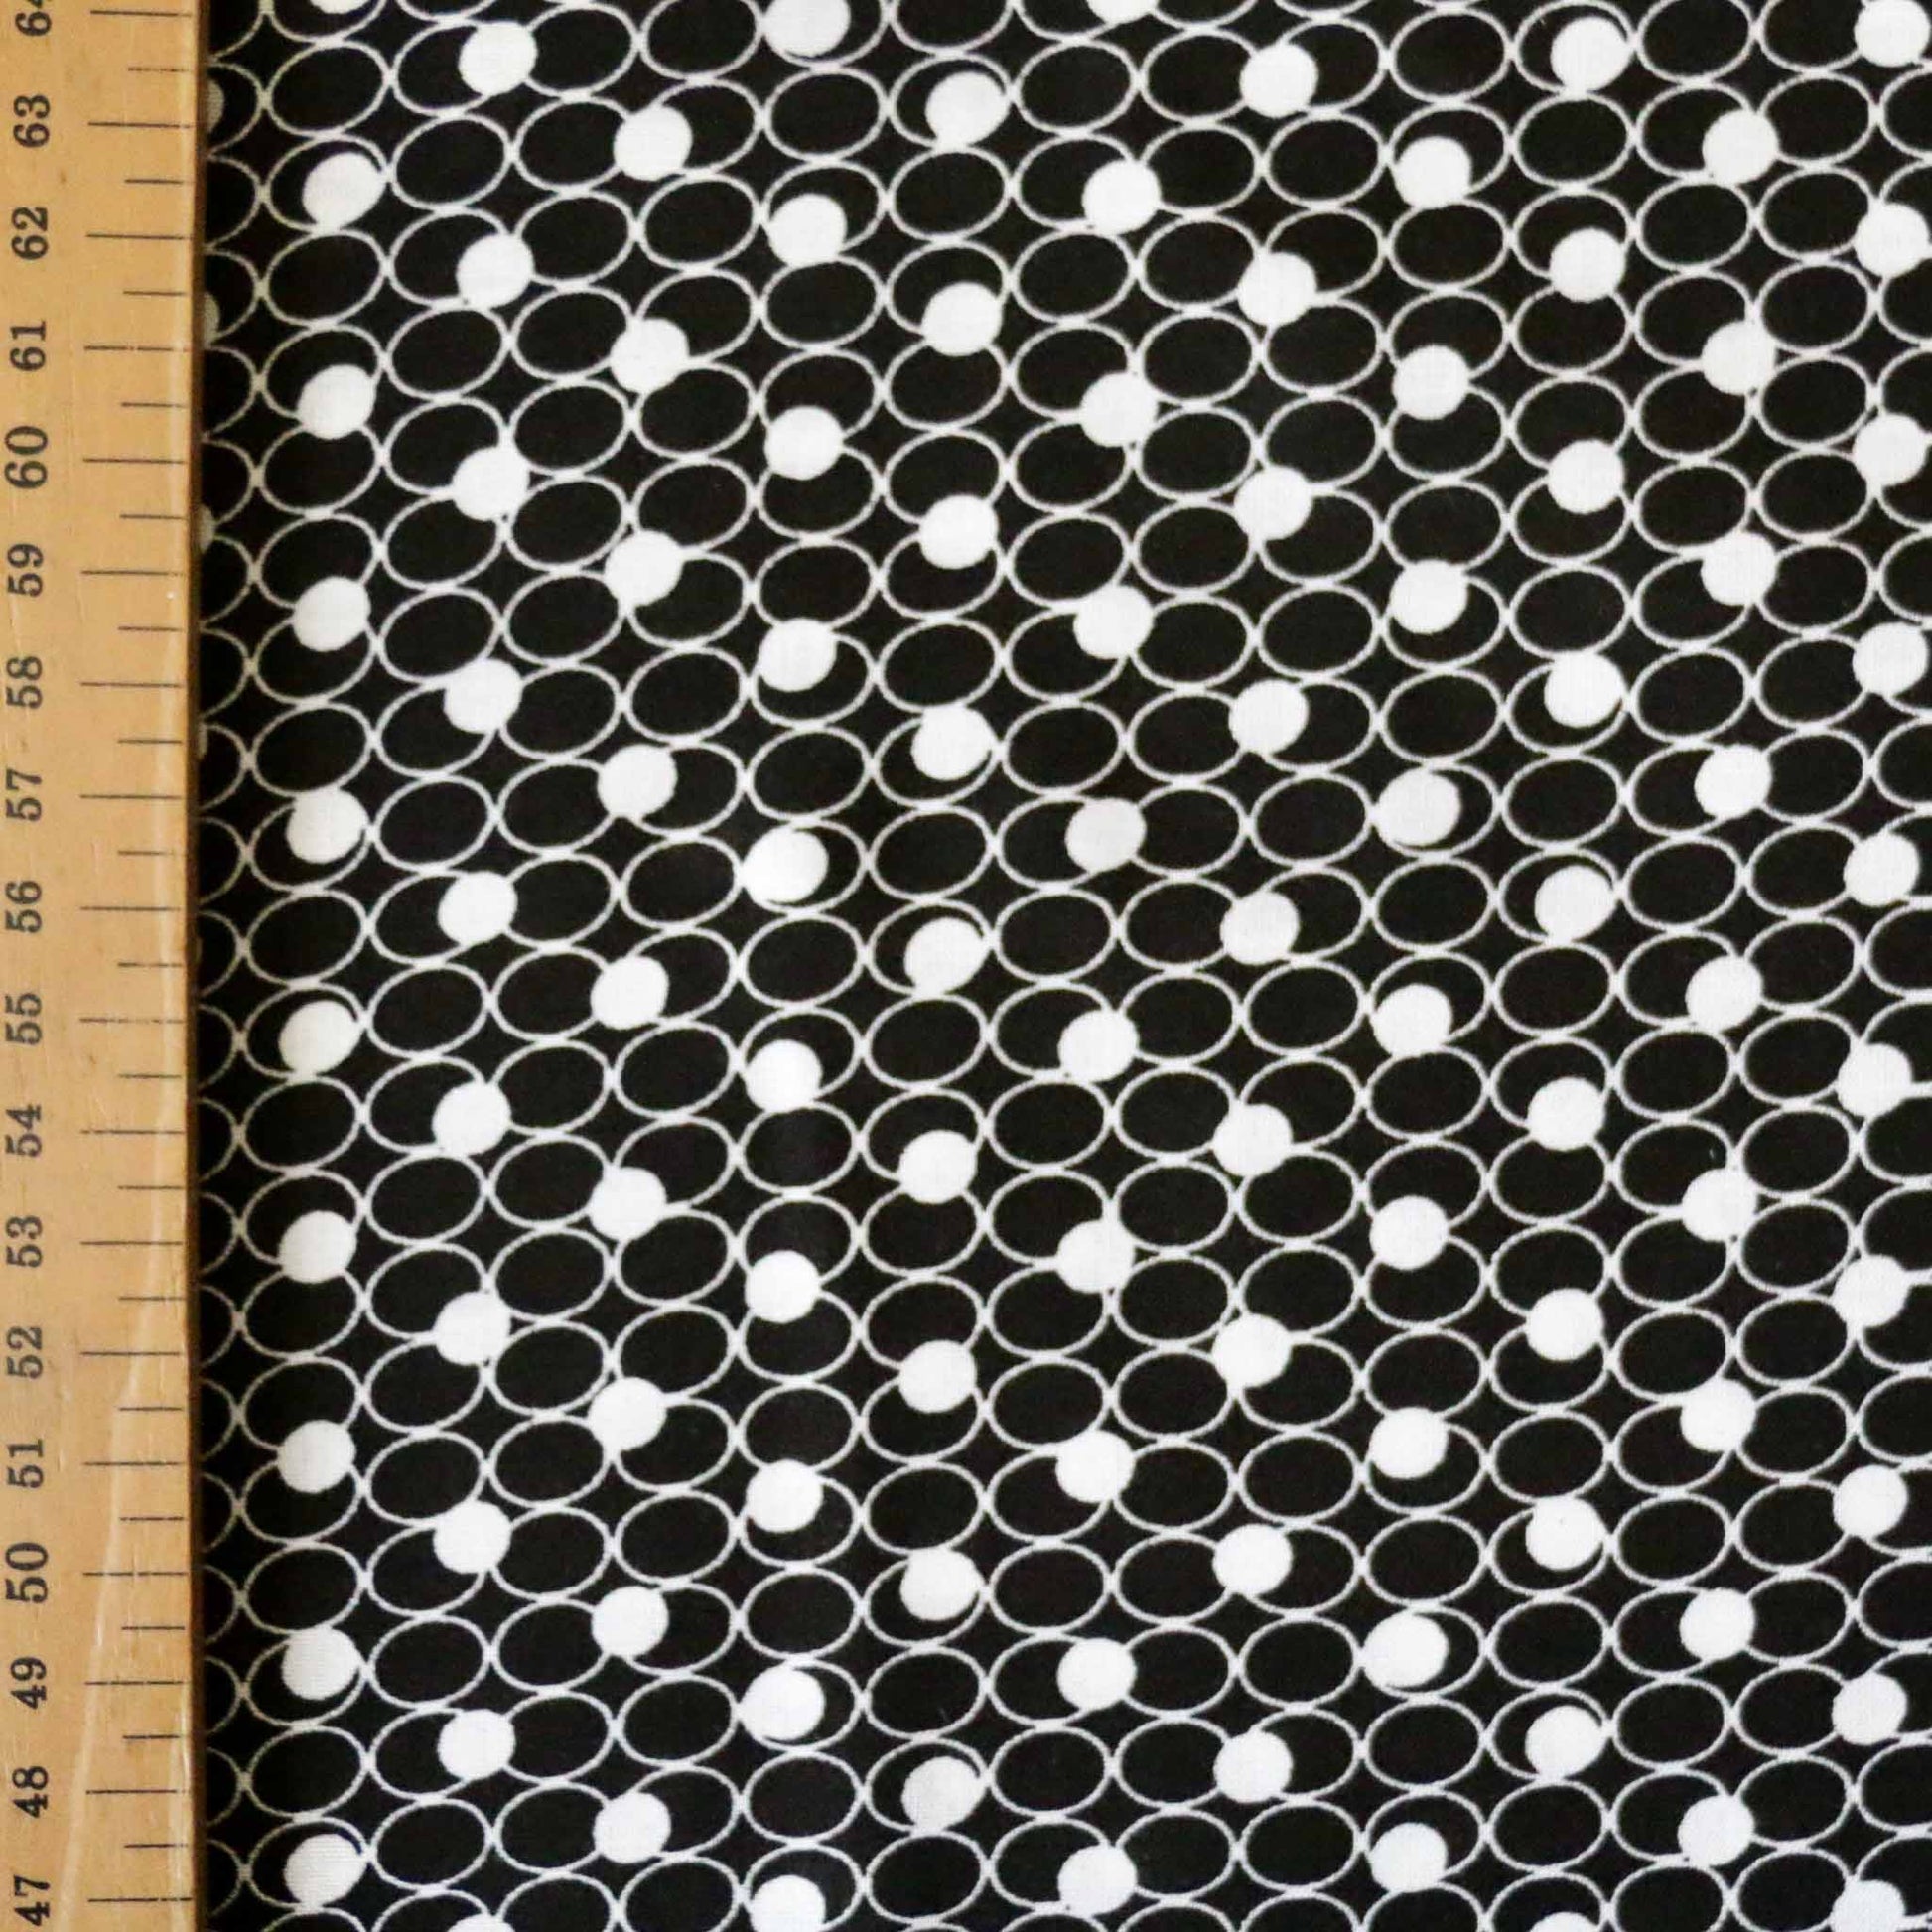 metre black viscose challis dressmaking fabric with white geometric circle printed design